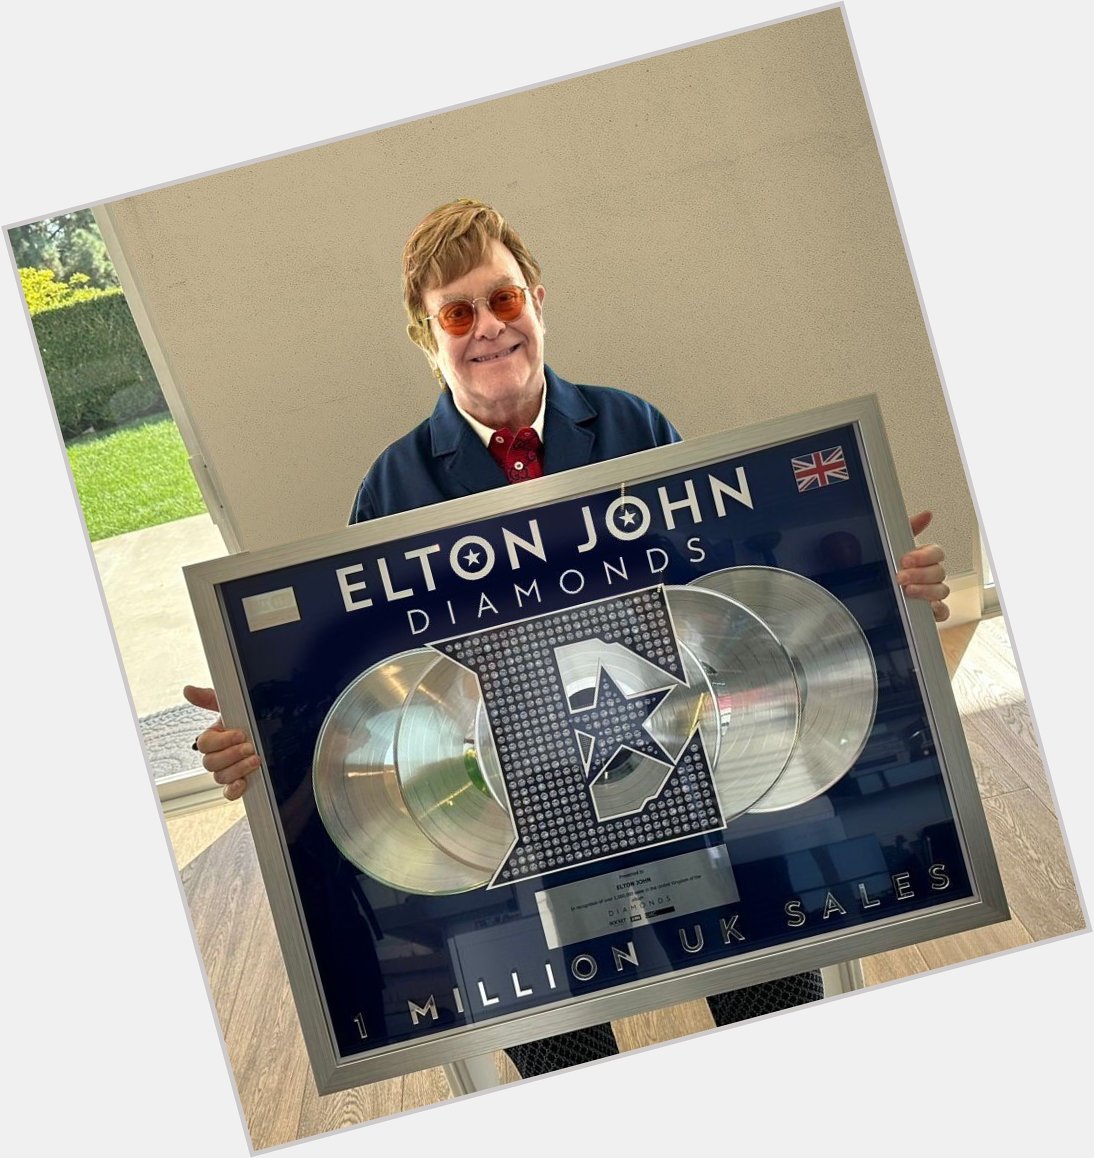   Happy birthday Elton John 76 